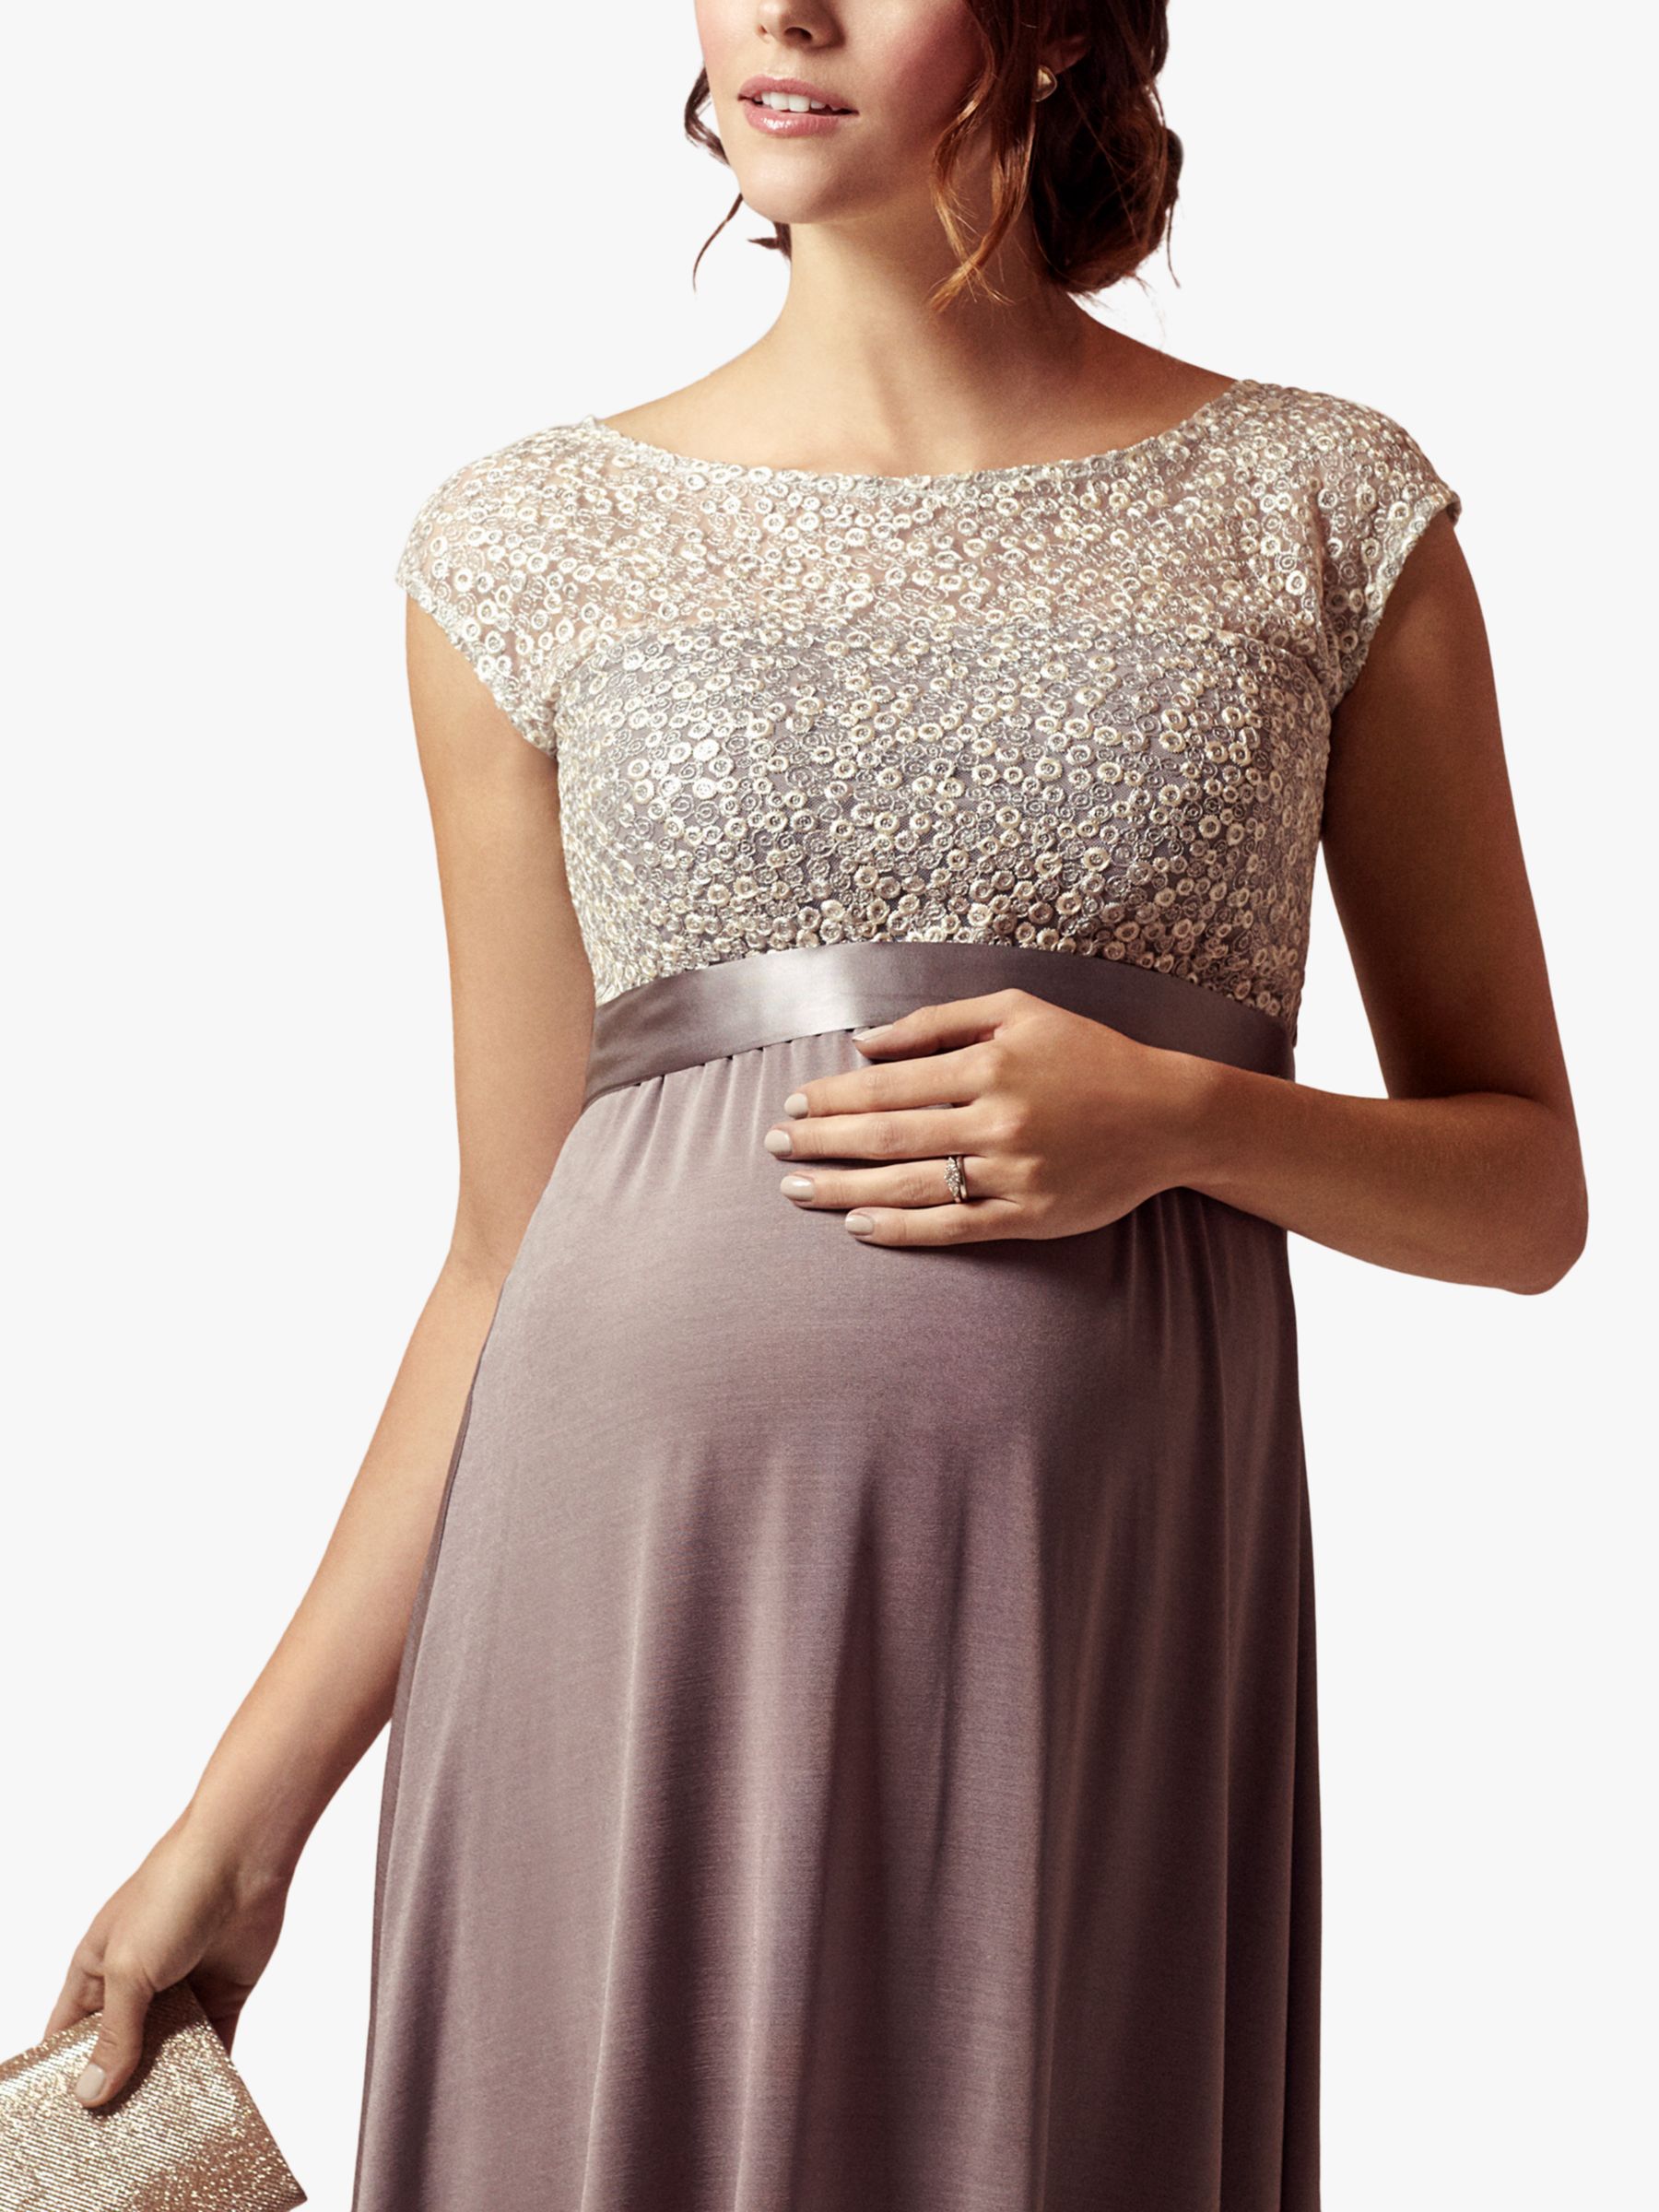 Tiffany Rose Mia Embroidered Bodice Maternity Dress, Dusky Truffle, 6-8